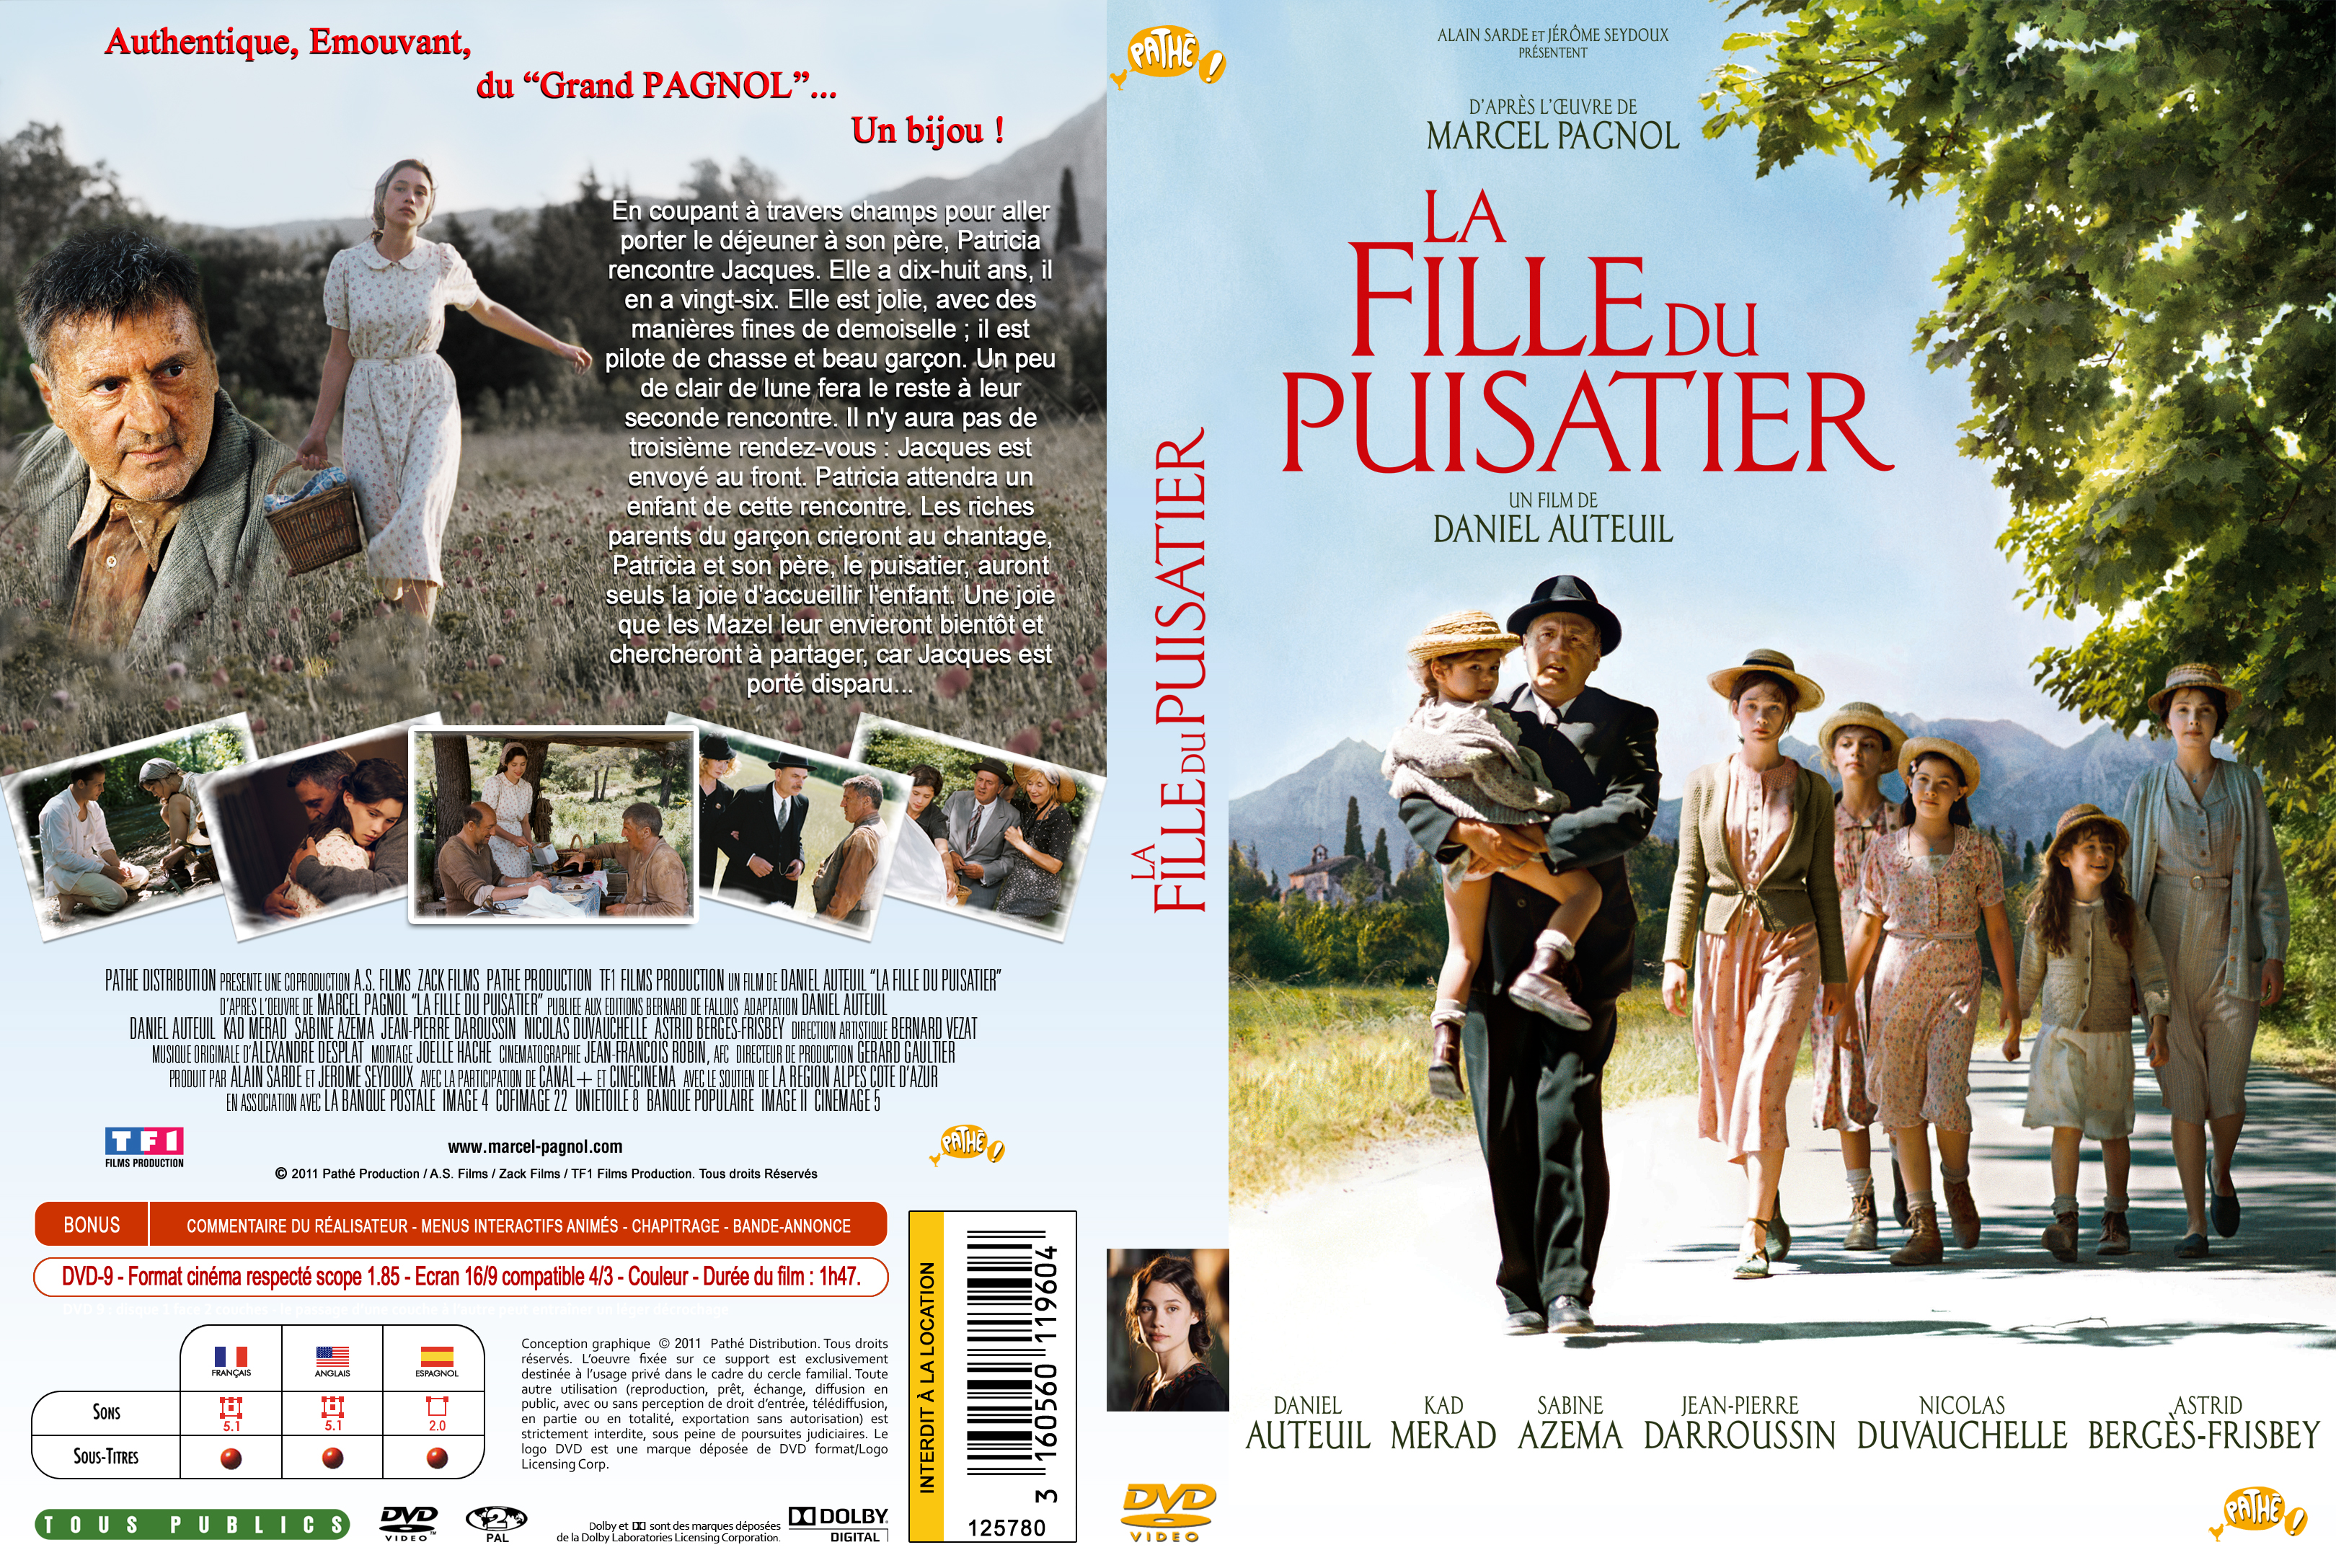 Jaquette DVD La fille du puisatier (2011) custom v2